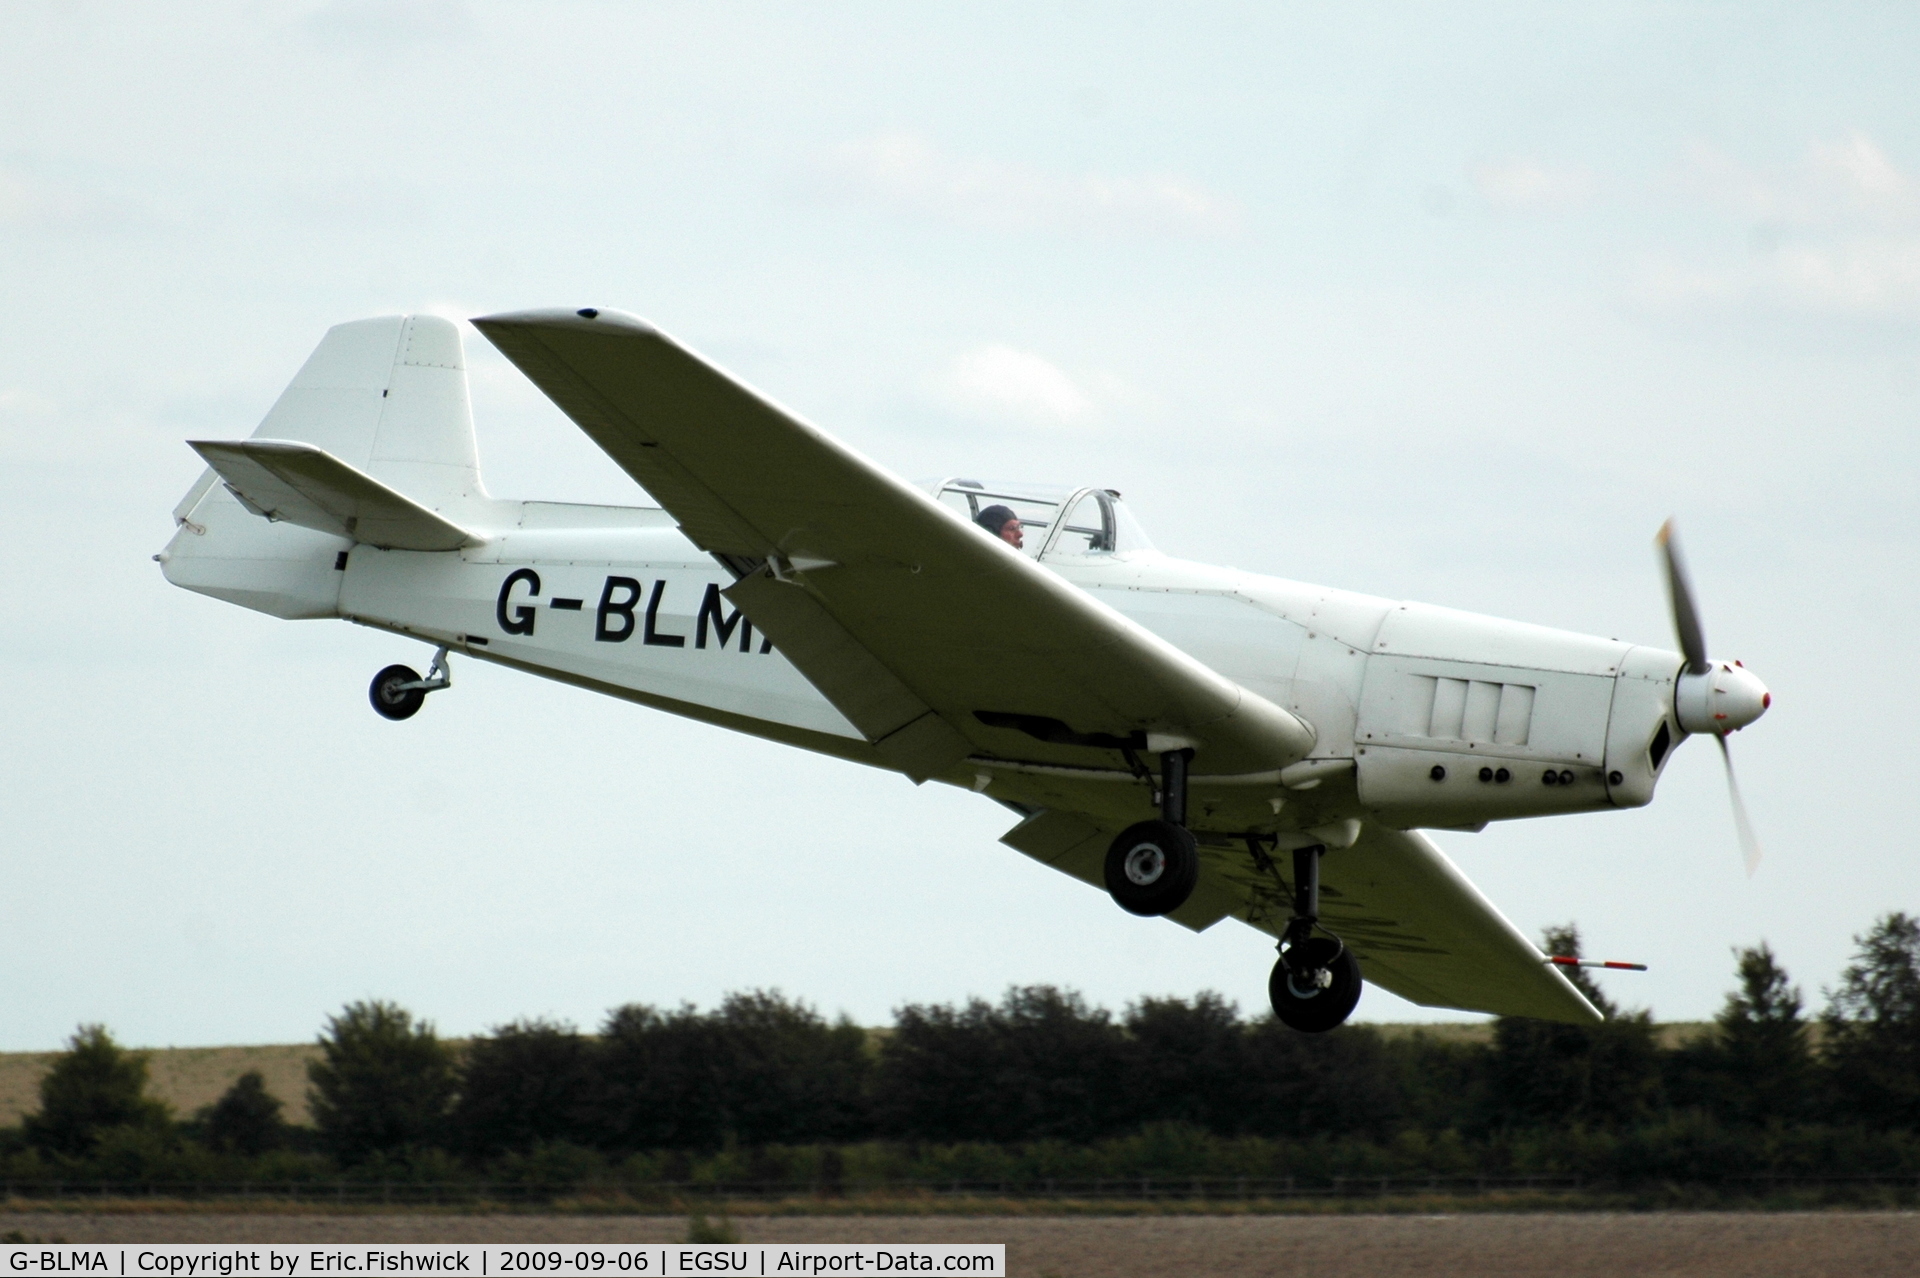 G-BLMA, 1967 Zlin Z-526 Trener Master C/N 922, 4. G-BLMA at Duxford Air Show Sept 09